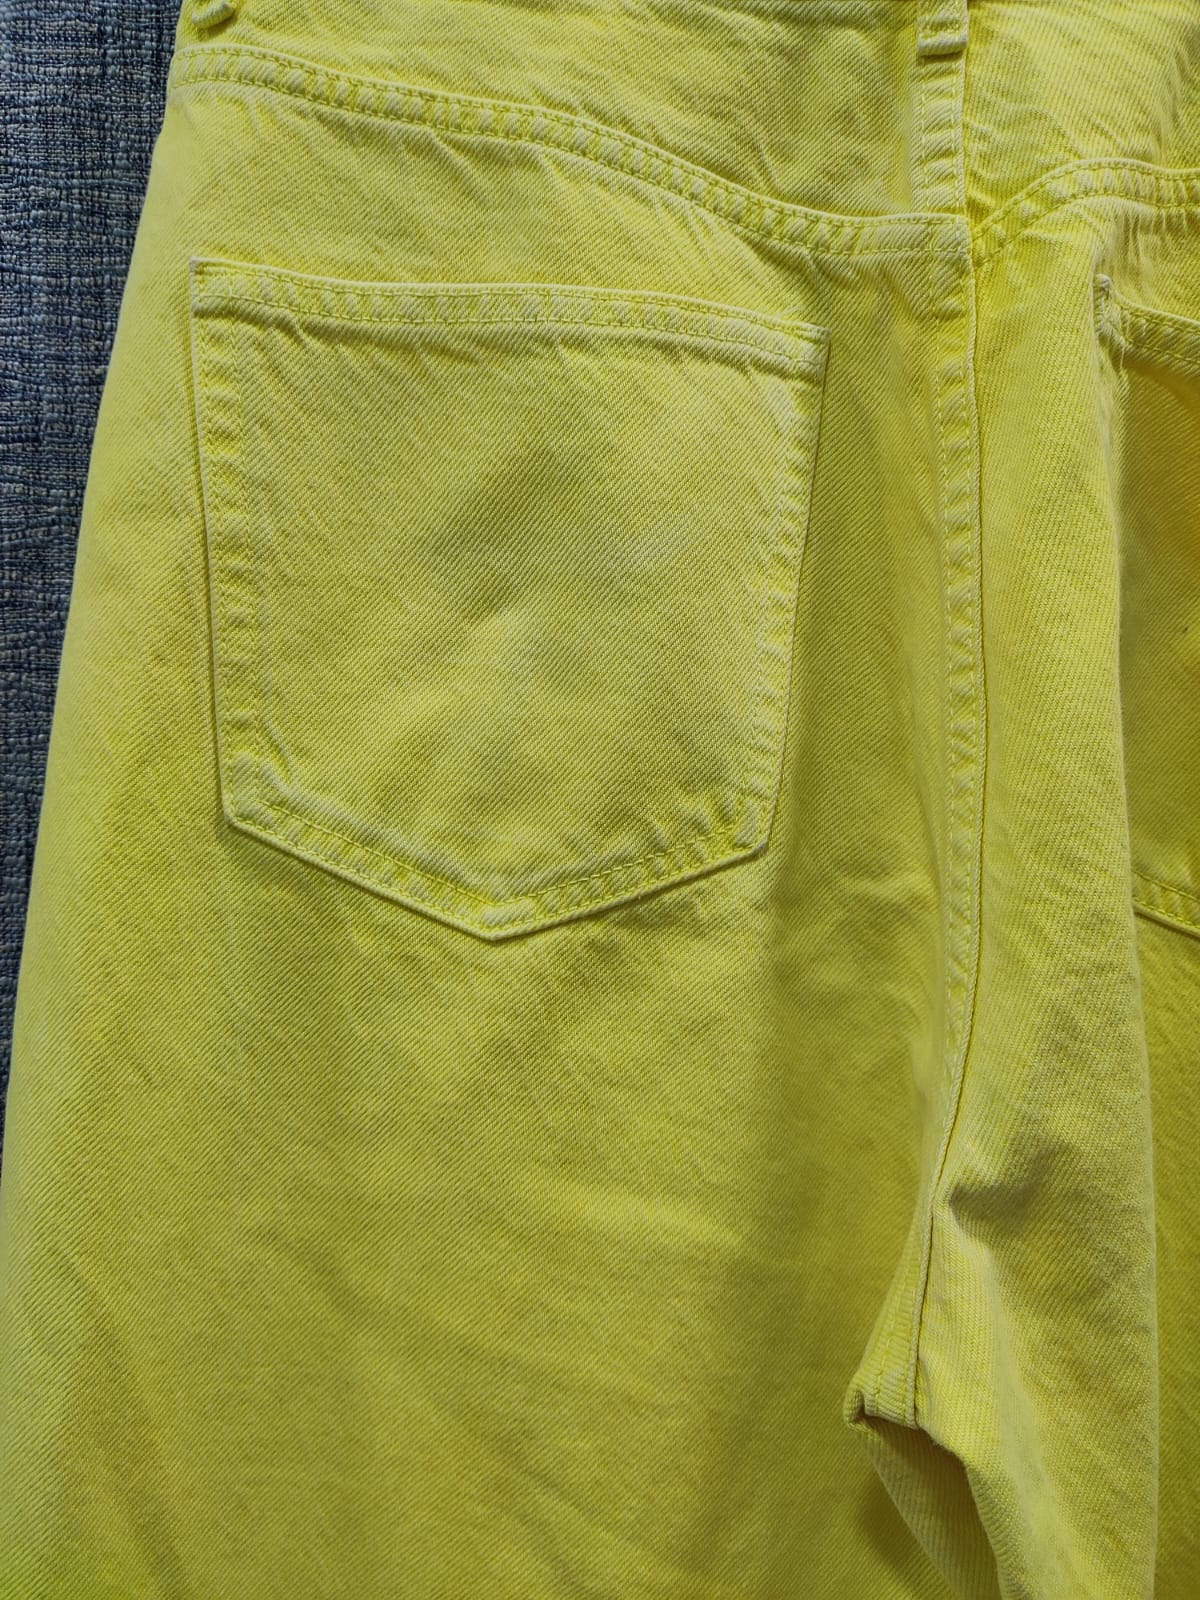 ZARA Light Yellow Wide Leg Denim Jeans | Relove